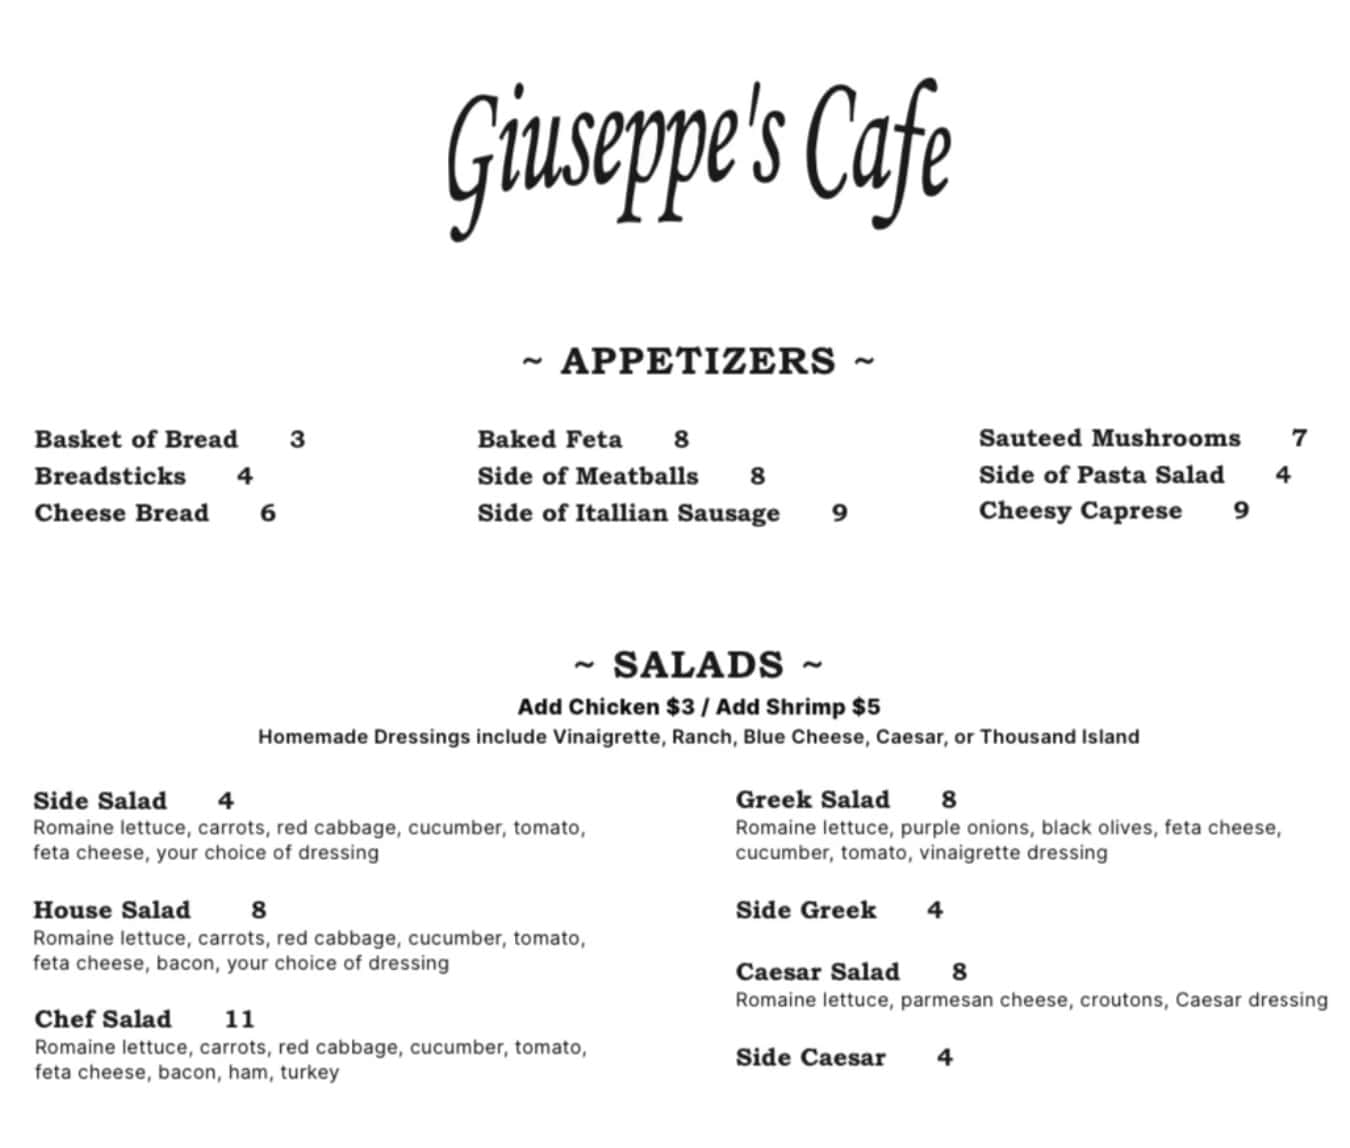 Giuseppe's Cafe Appetizer and Salad Menu